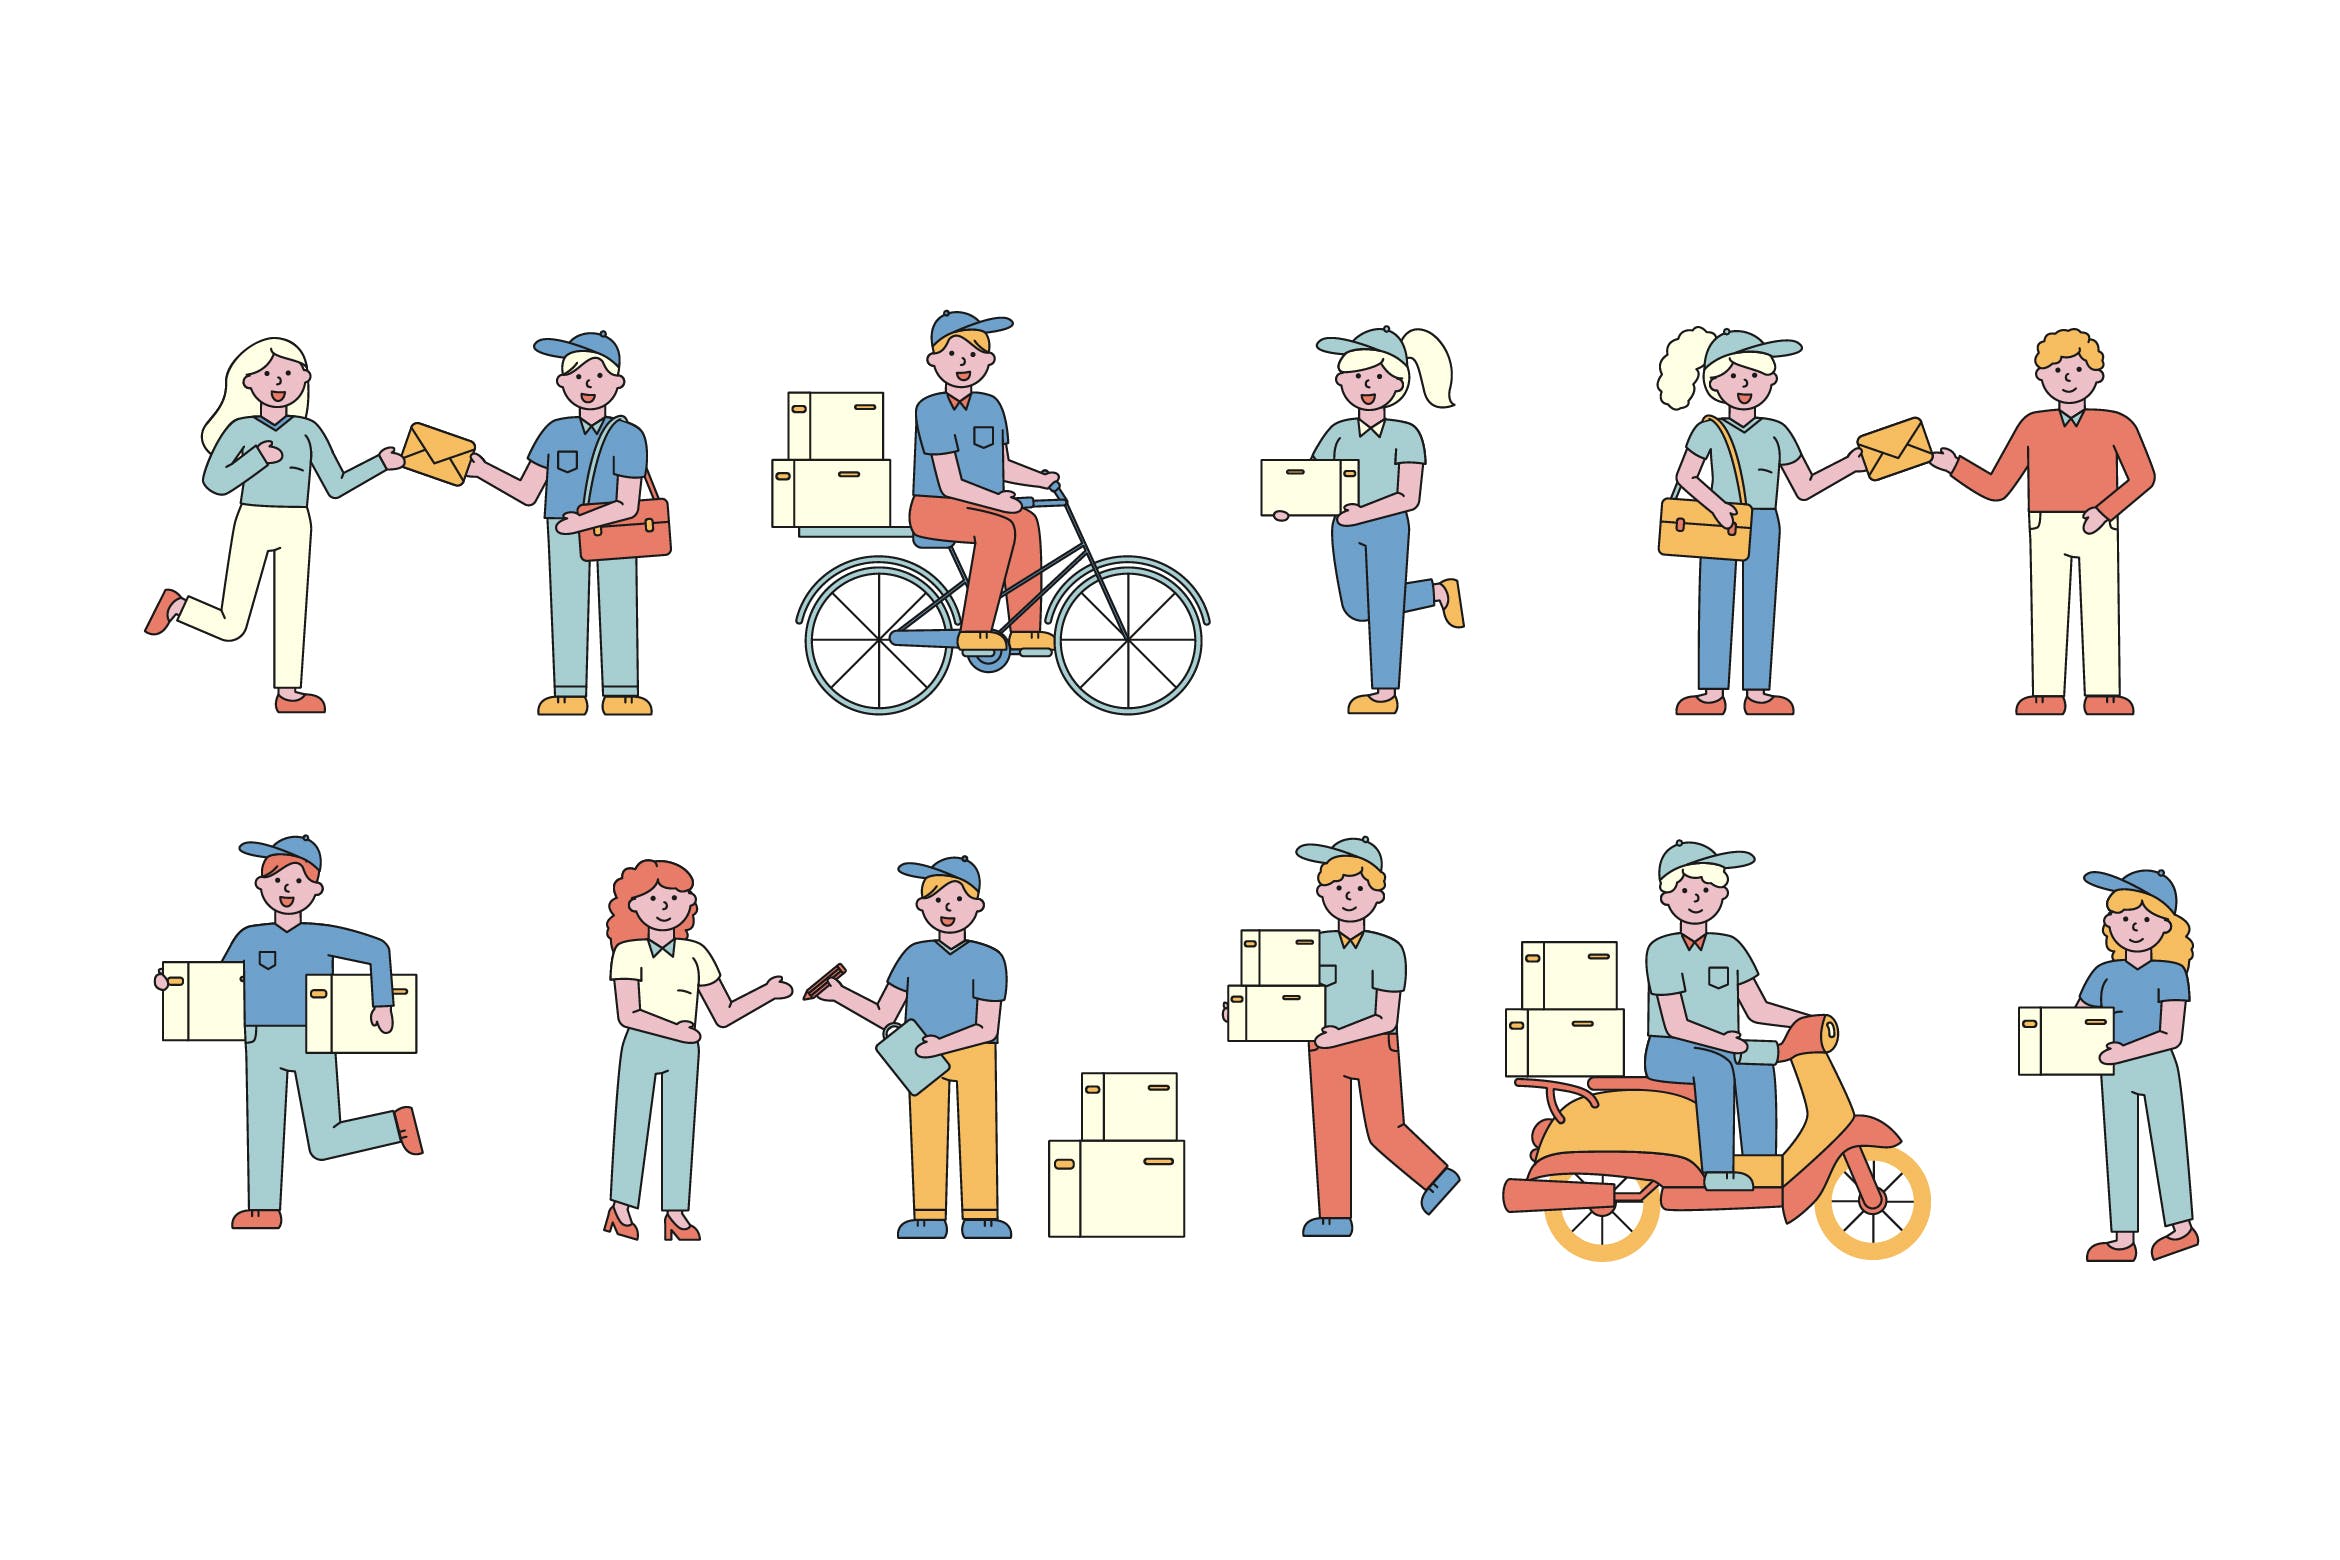 送药上门人物形象线条艺术矢量插画16图库精选素材 Mail delivery Lineart People Character Collection插图